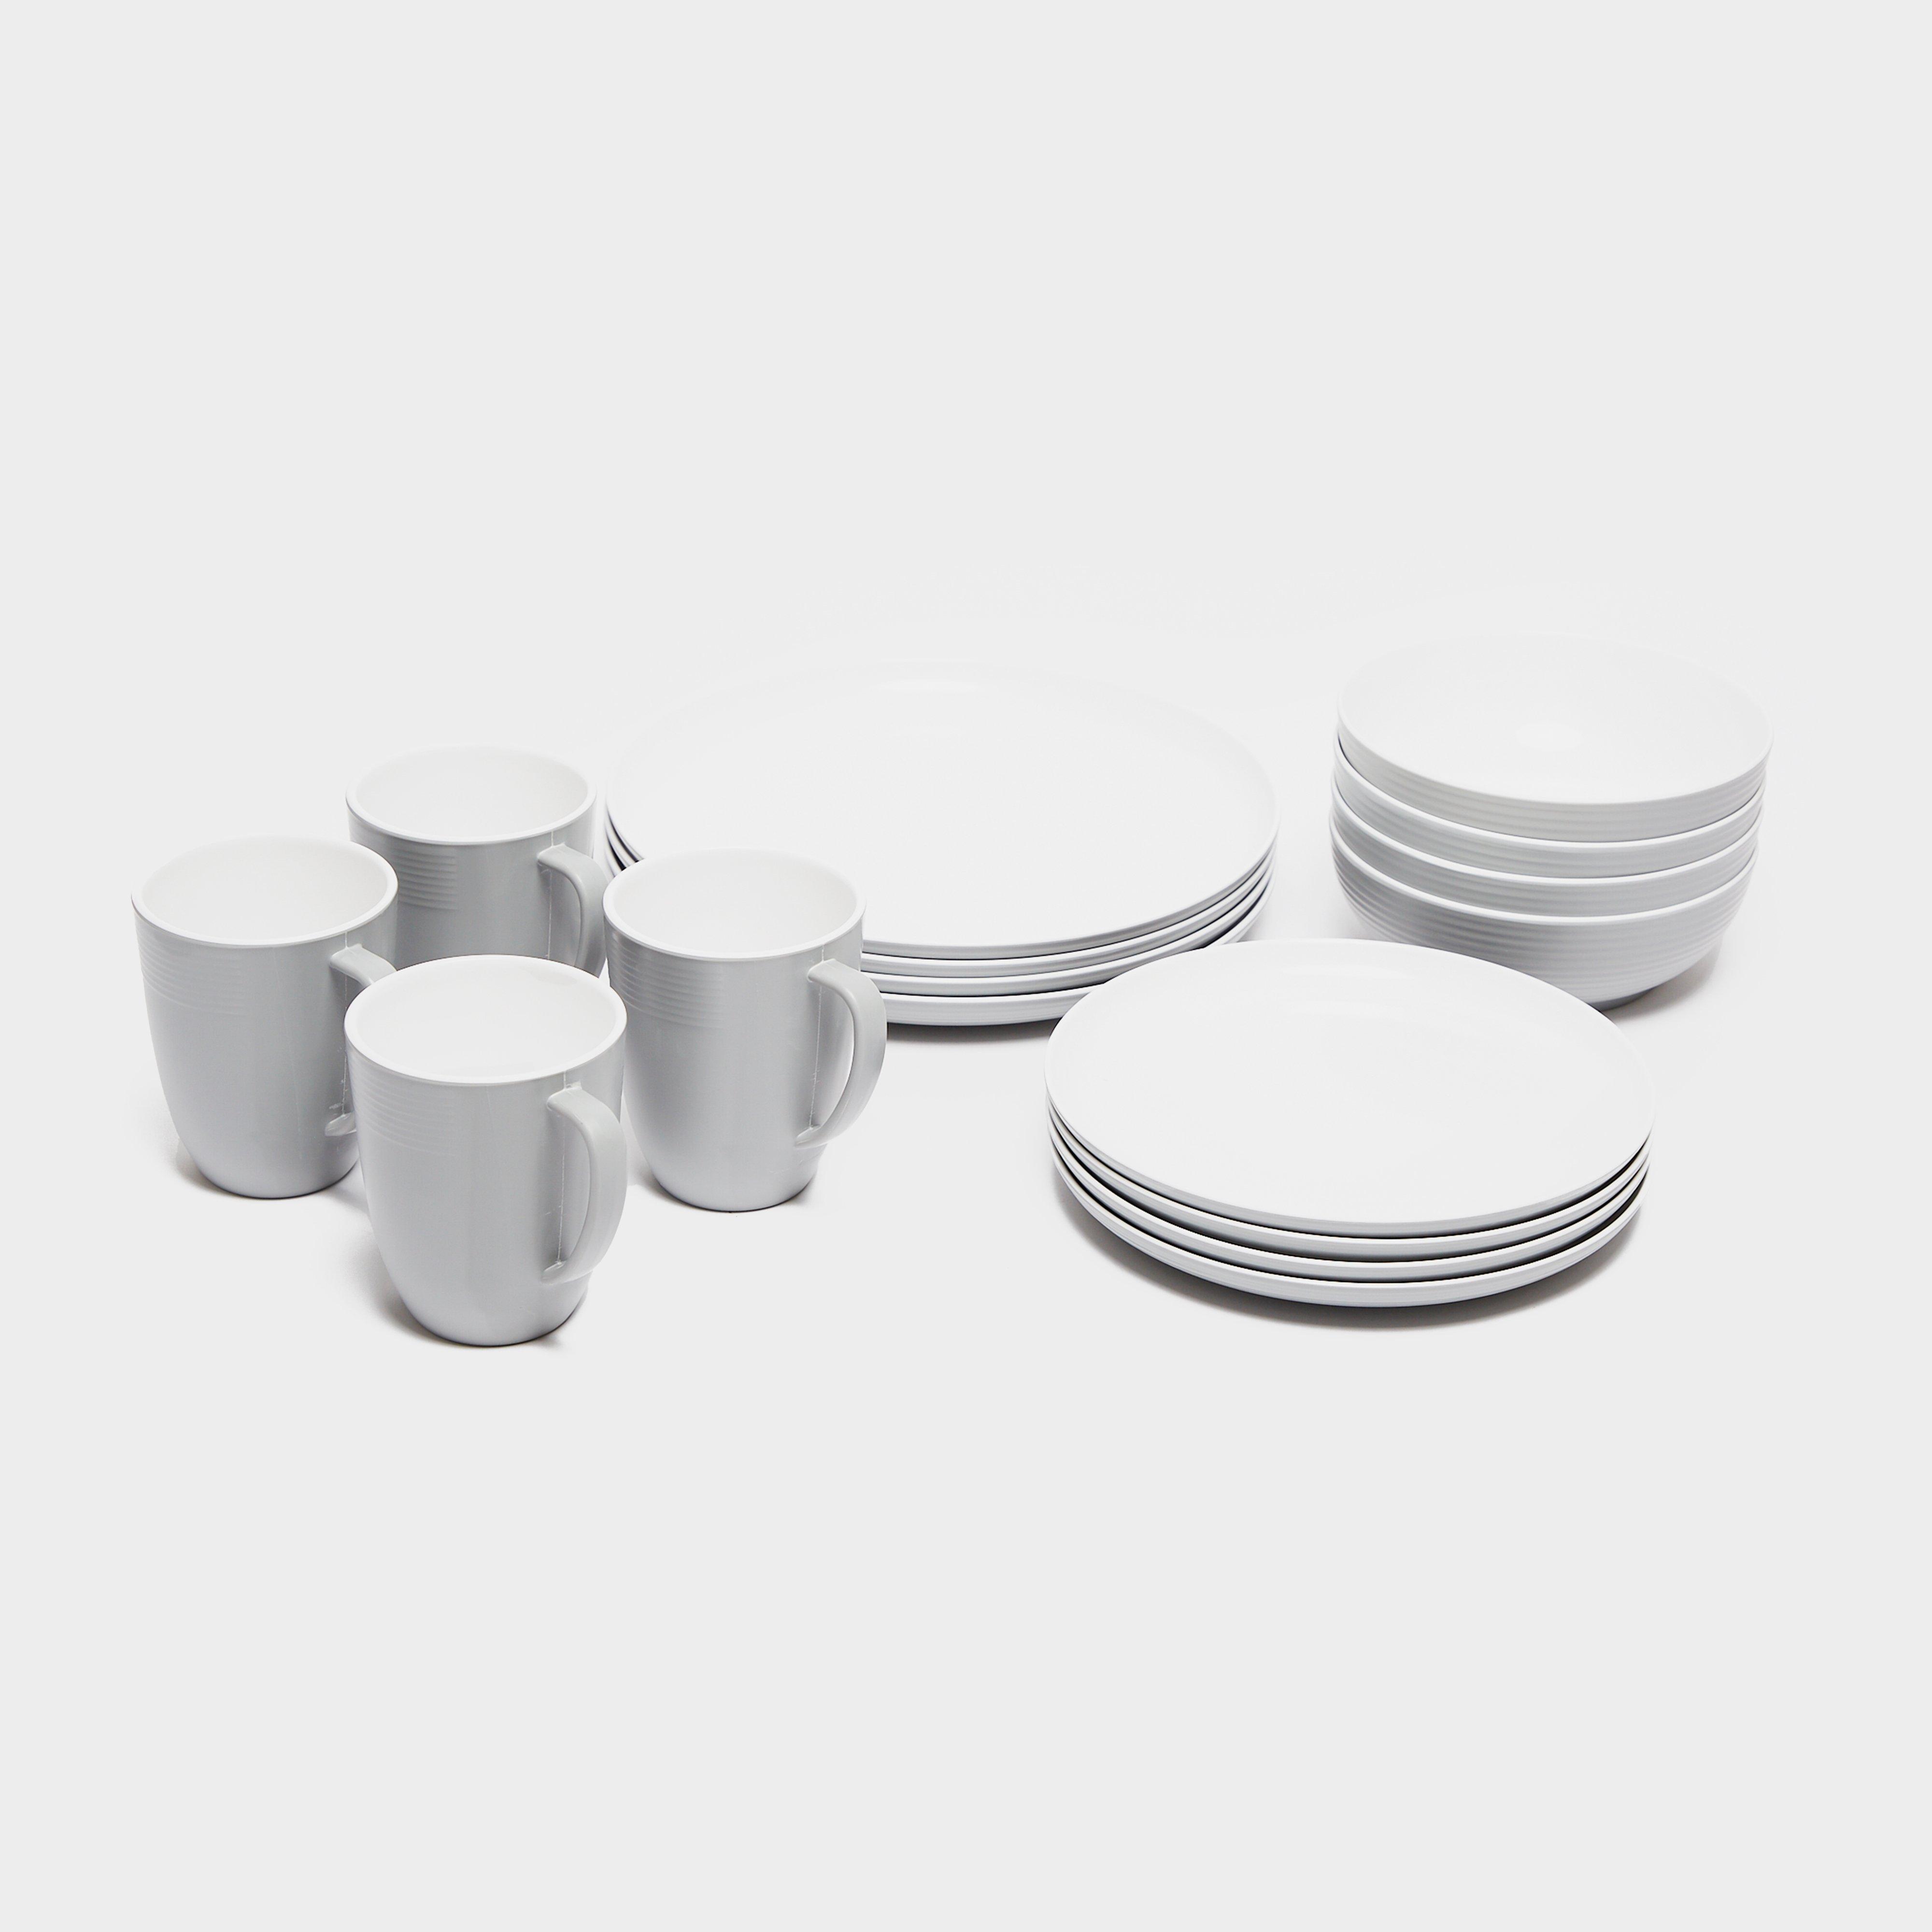 Image of Hi-Gear Deluxe 16 Piece Melamine Tableware Set - Grey/White, Grey/White